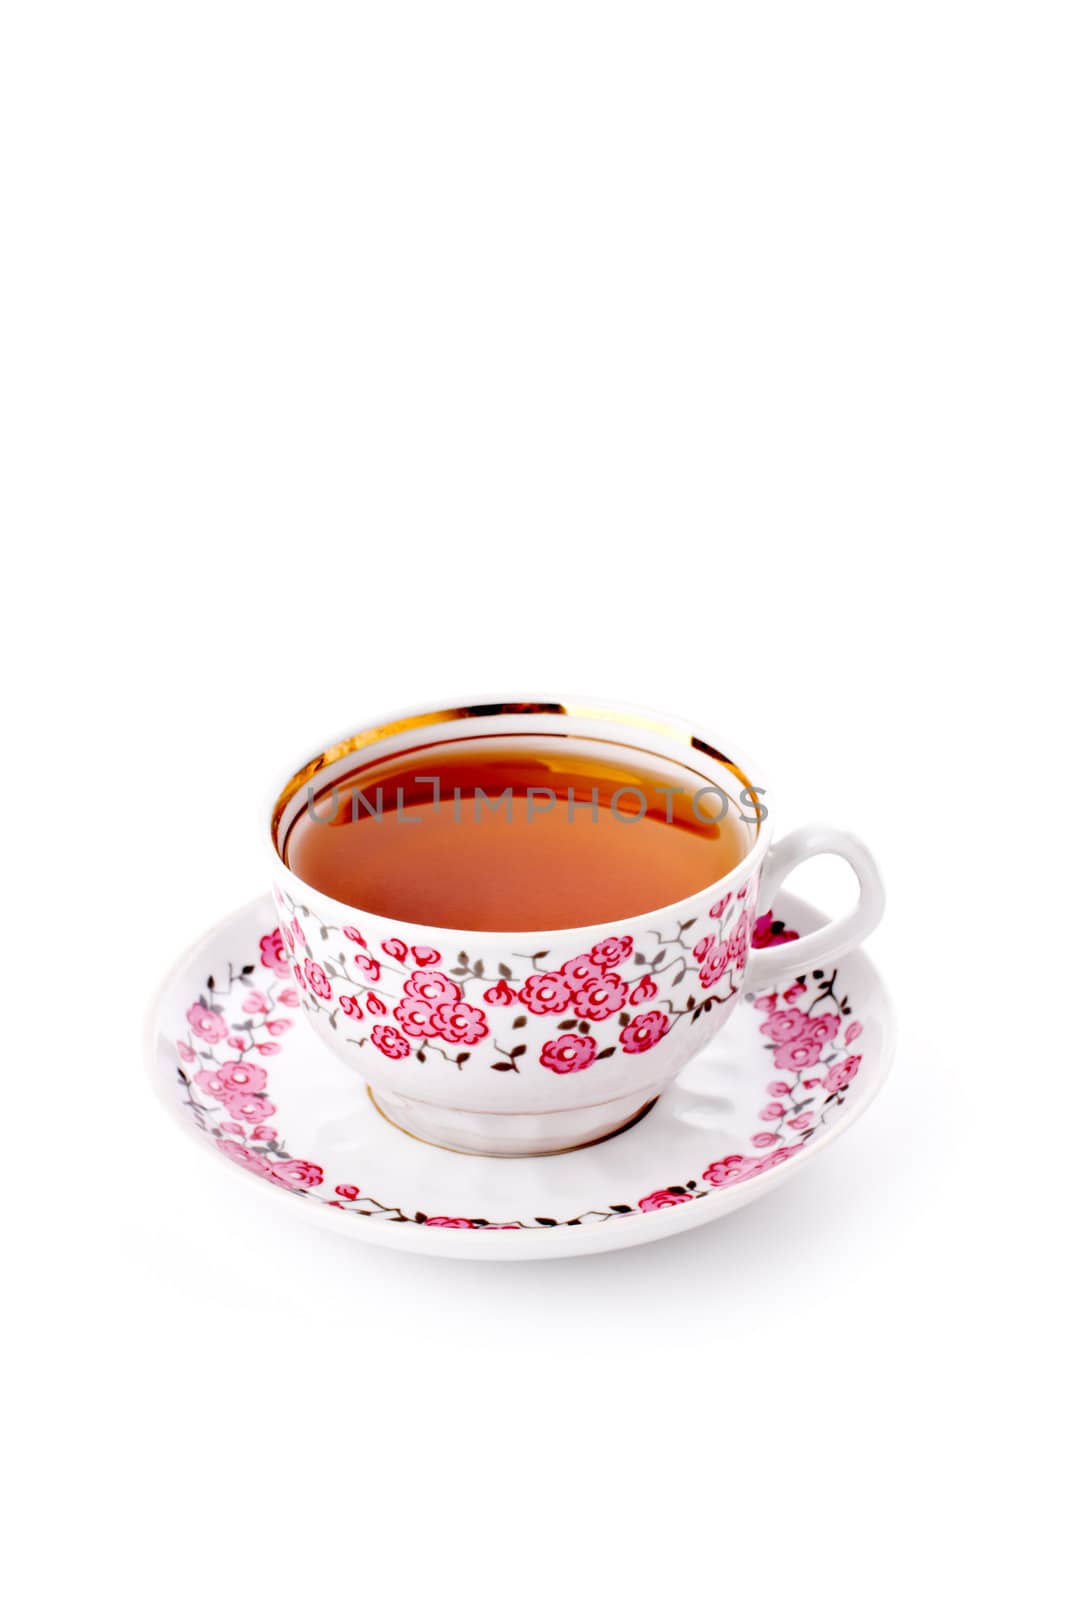 Elegant porcelain cup of tea by rozhenyuk